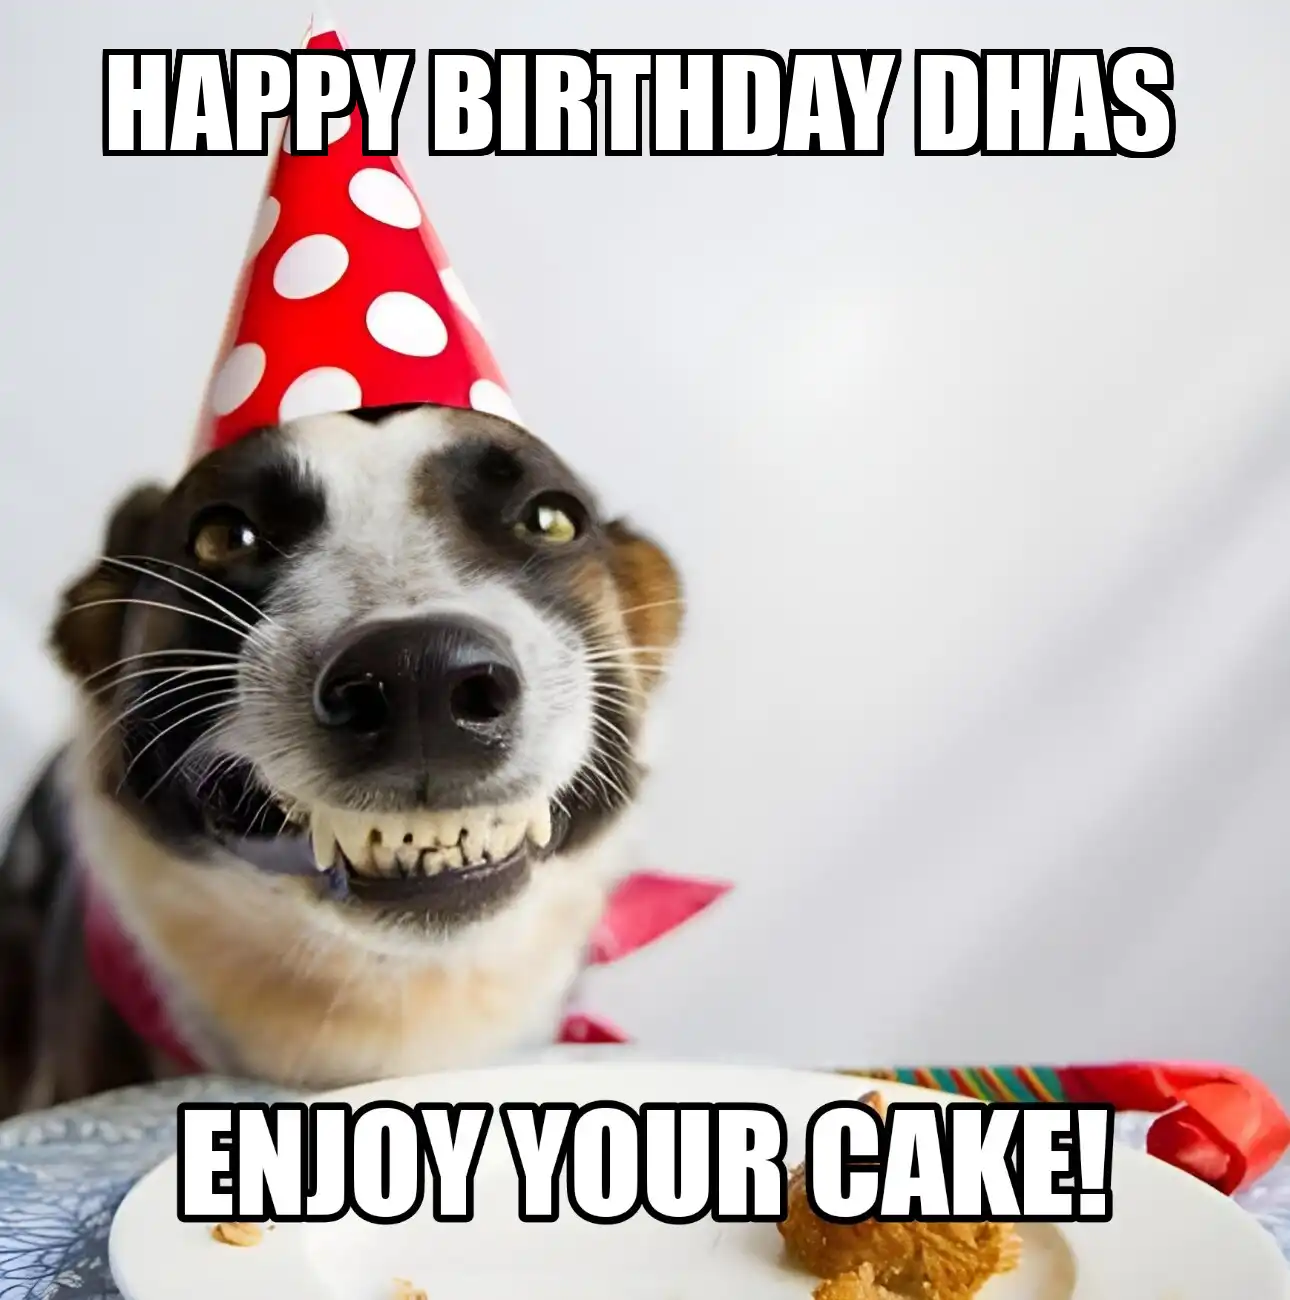 Happy Birthday Dhas Enjoy Your Cake Dog Meme